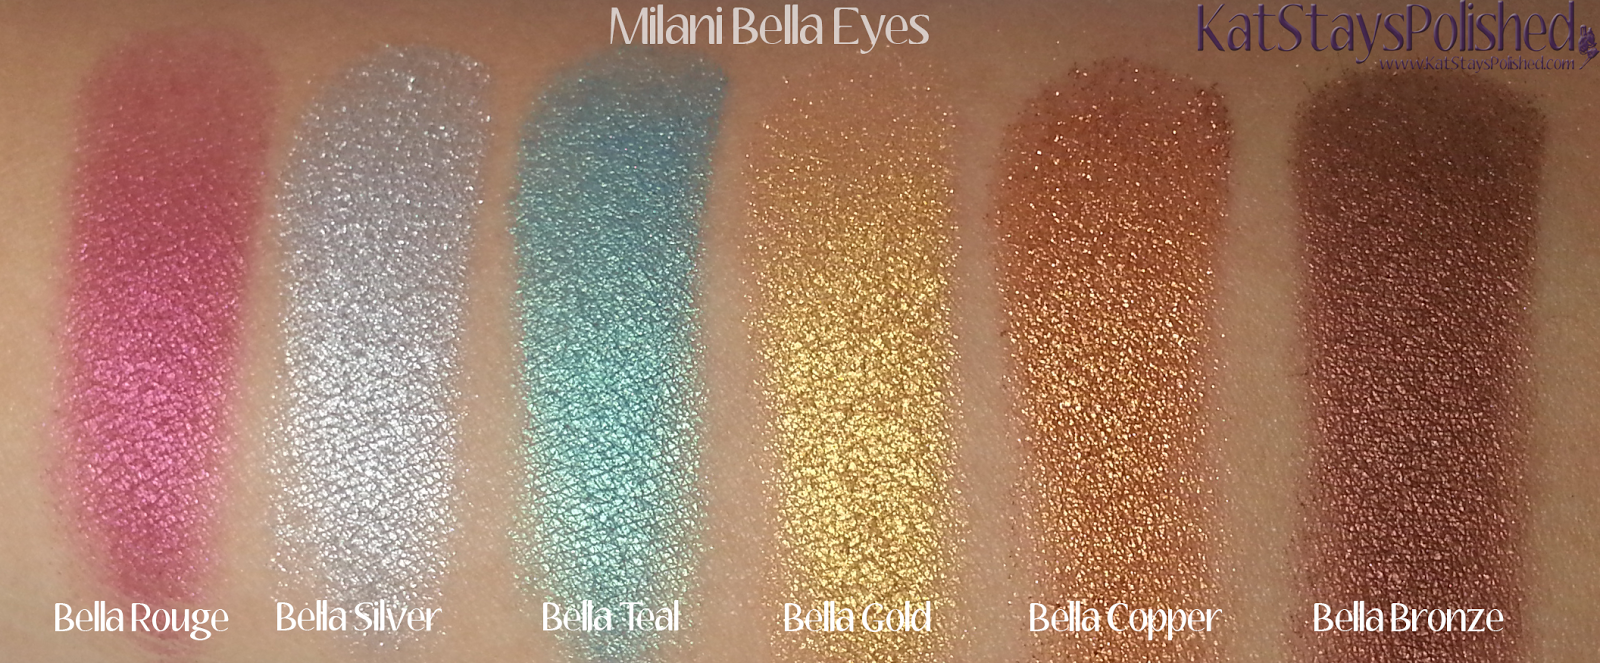 Milani Bella Eyes Gel Powder Eye Shadow - Swatches 19-24 | Kat Stays Polished